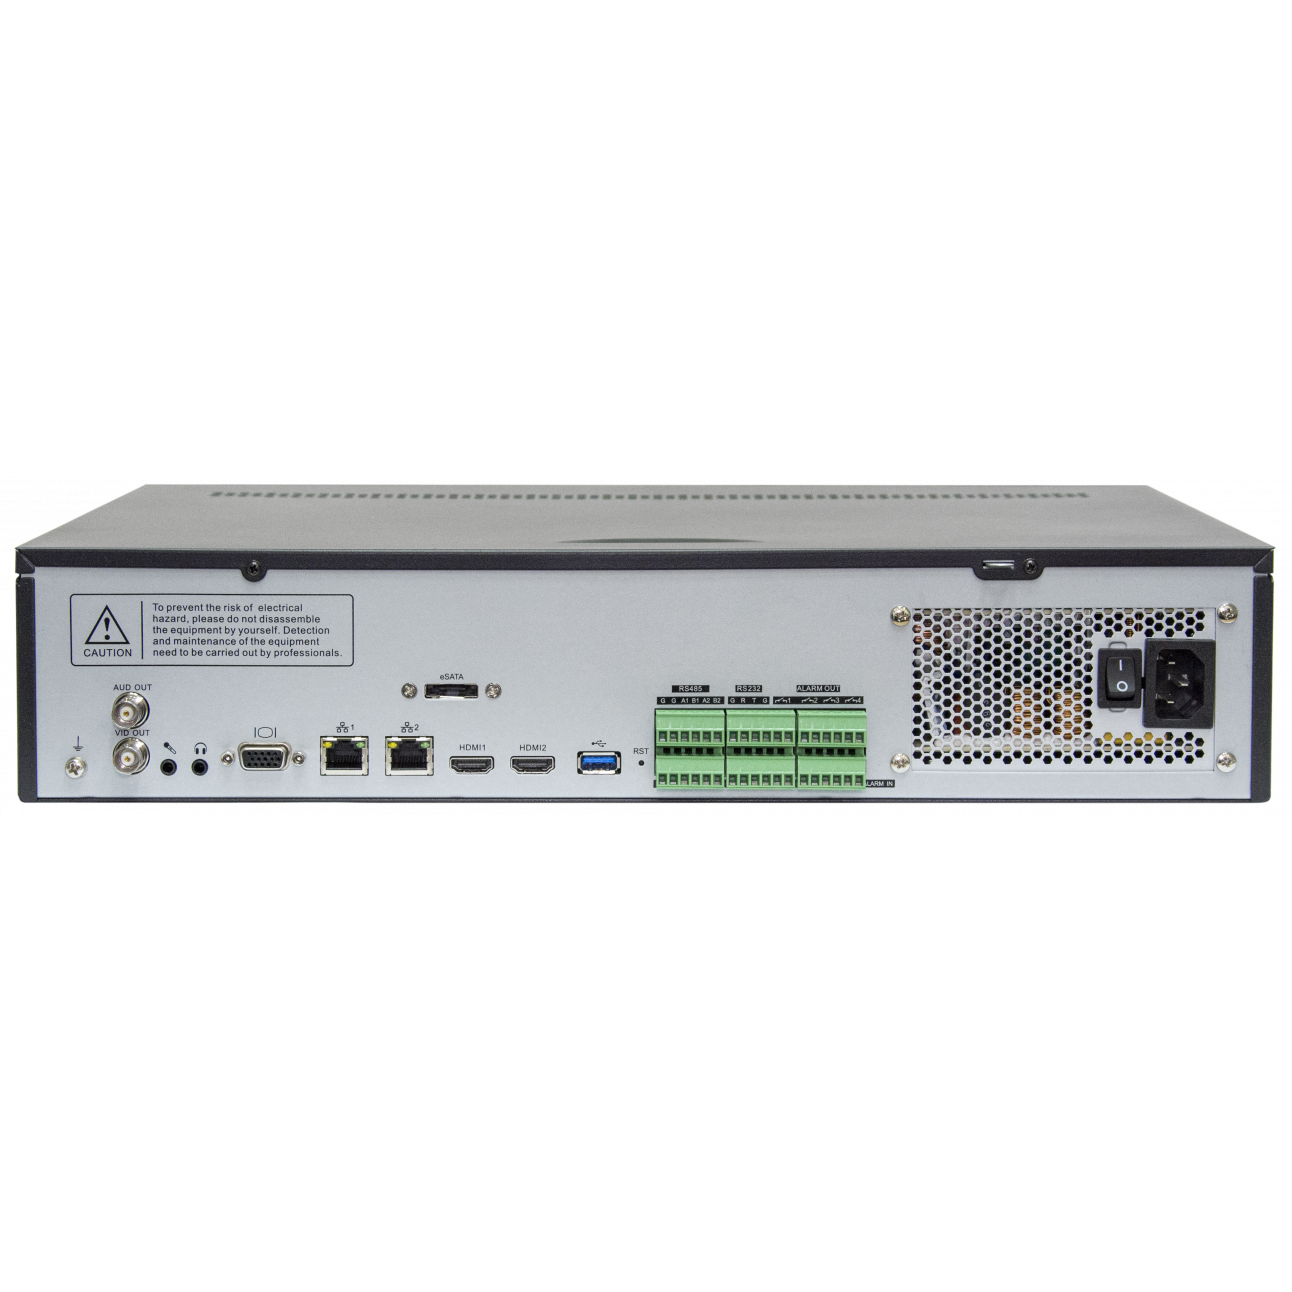 IP Видеорегистратор сетевой OMNY PRO 80 каналов, вх/исх битрейт 400/200Mbits, 8xHDD до 10Тб, 2xHDMI/VGA, RAID (0,1,5,10), трев вх/вых  16/4 (уценка)